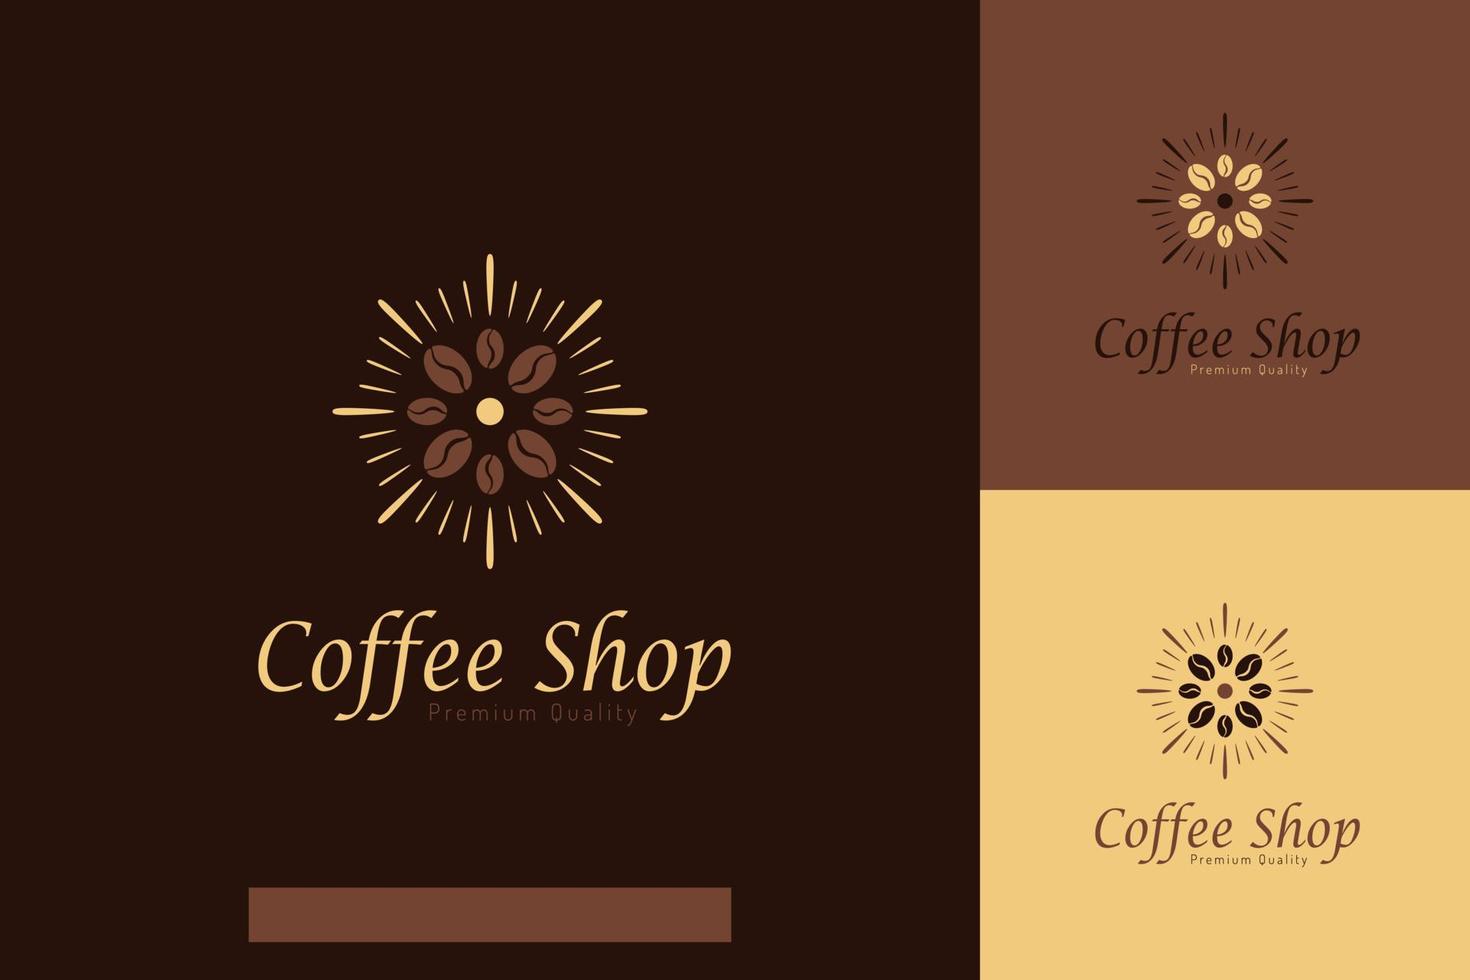 conjunto de modelos de design de vetor de logotipo de cafeteria com estilos de cores diferentes